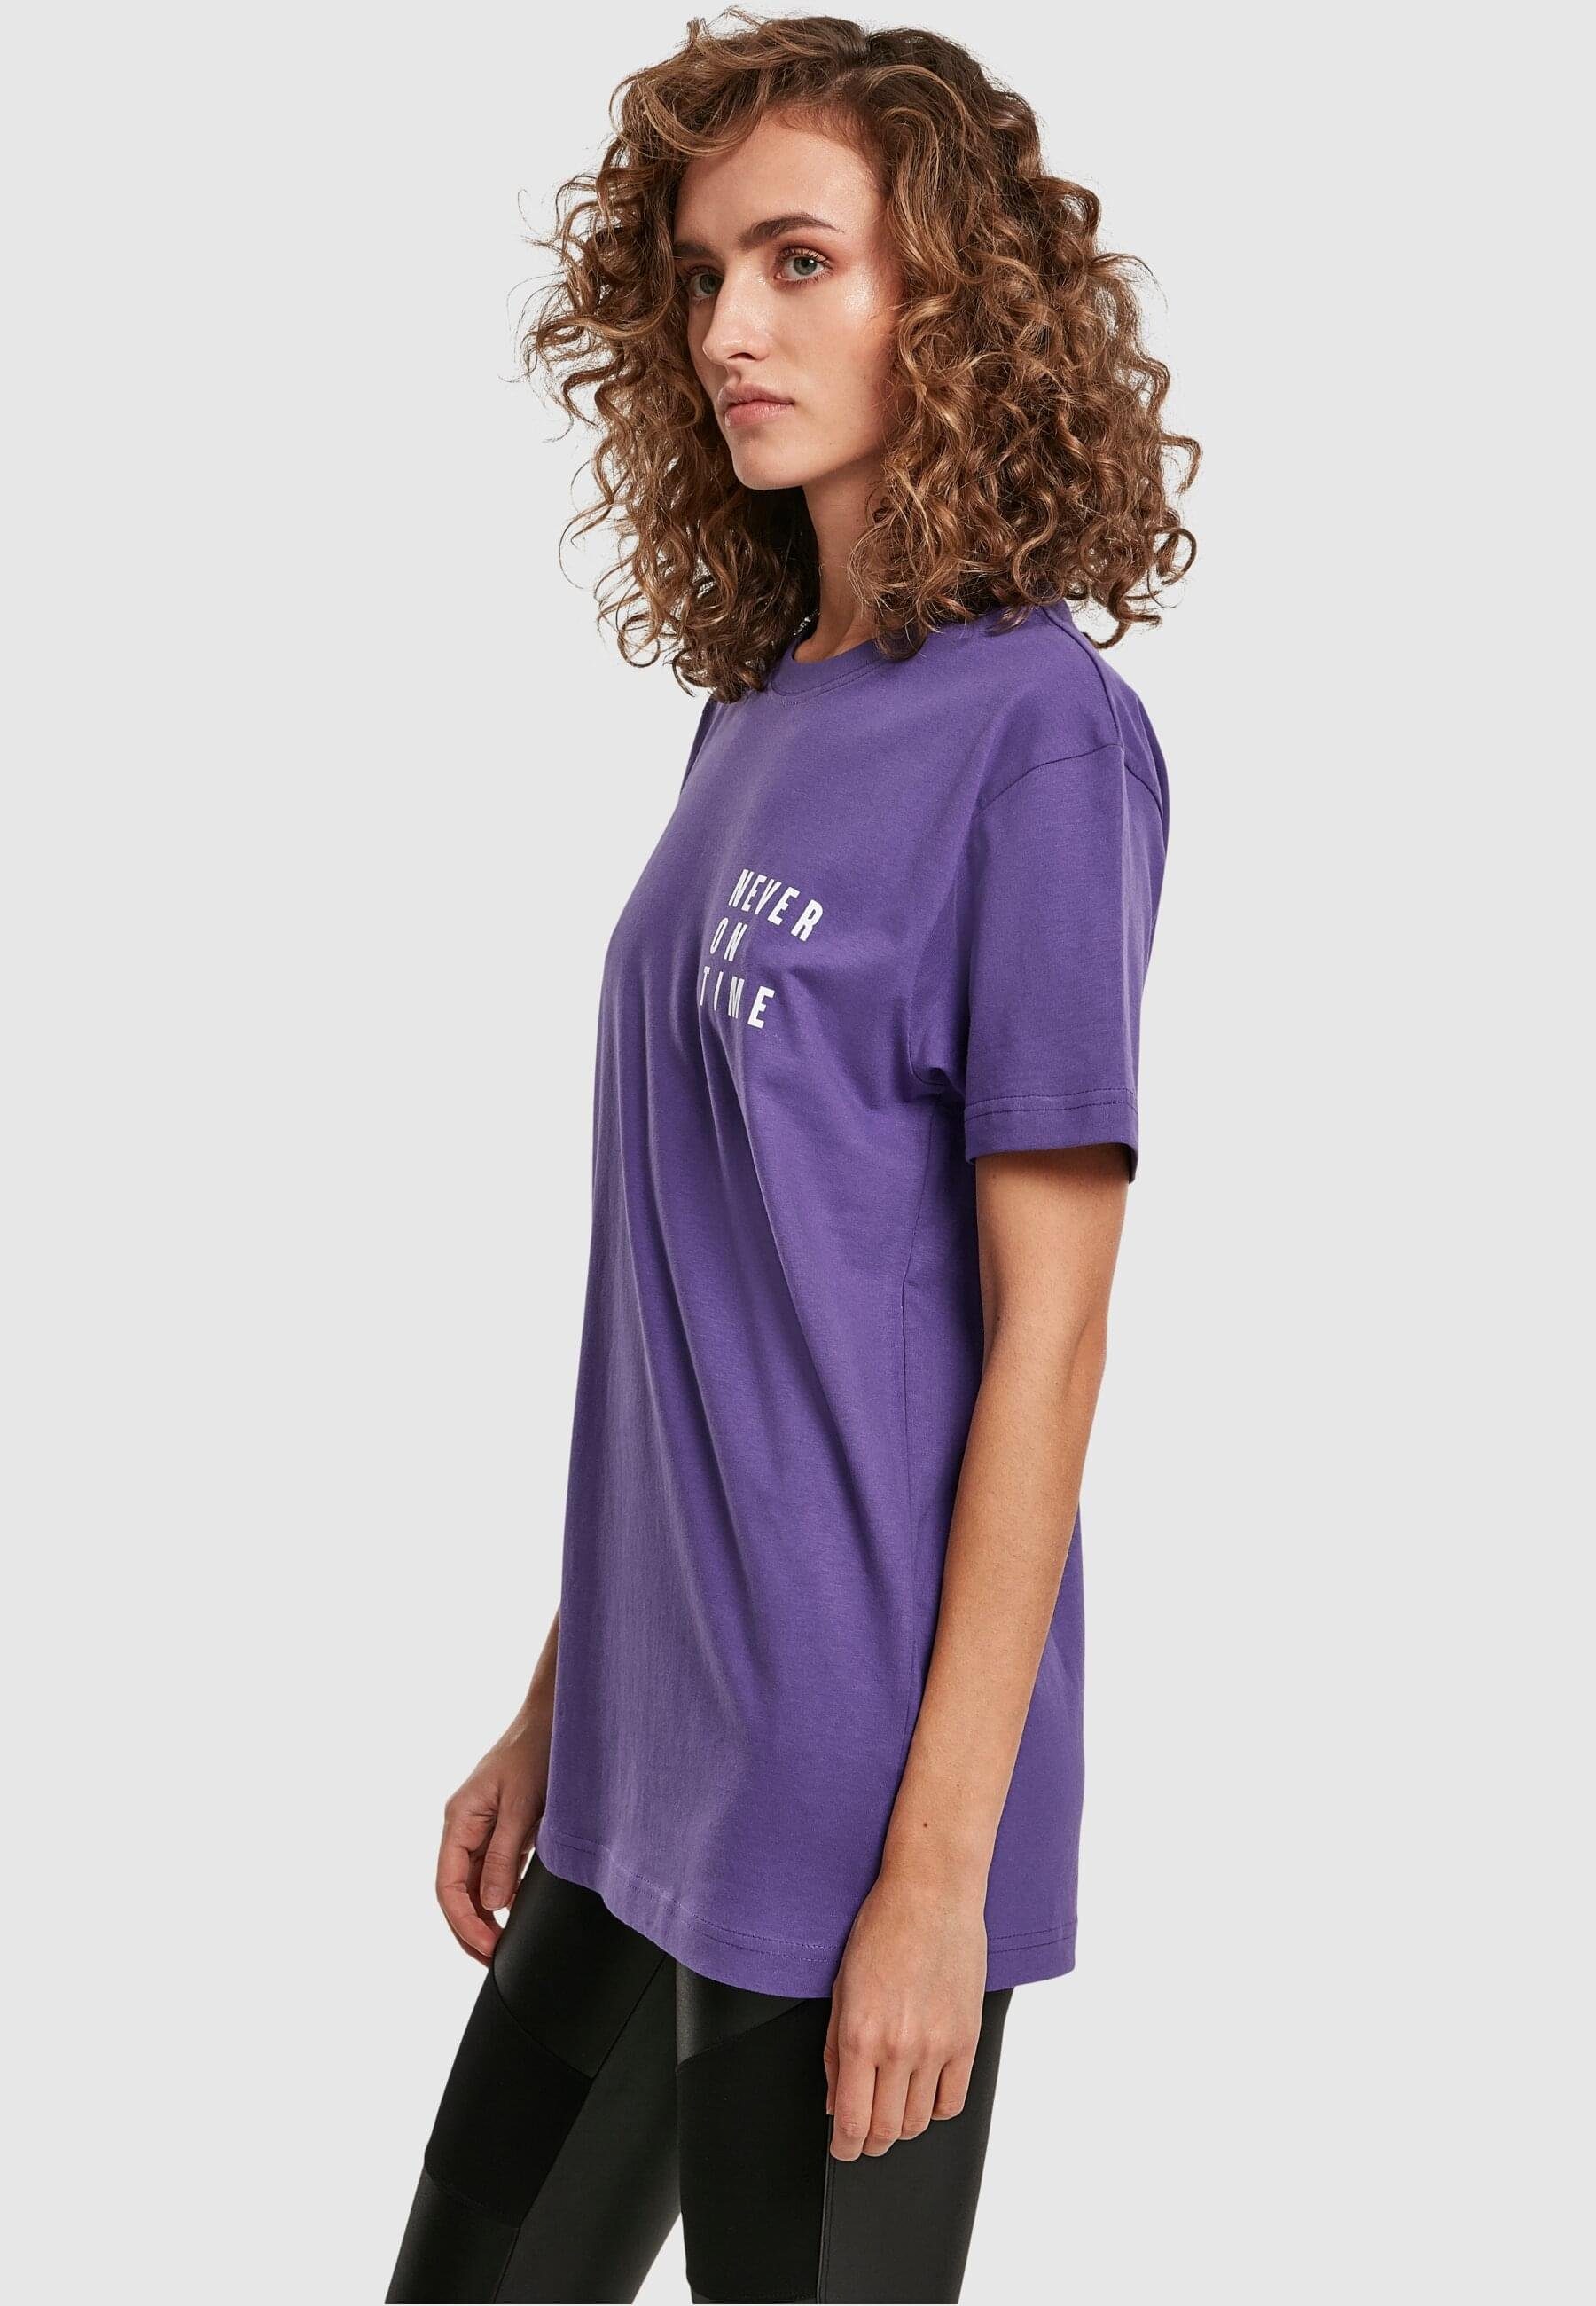 Time ultraviolet Kurzarmshirt Damen On Never Tee MisterTee (1-tlg)